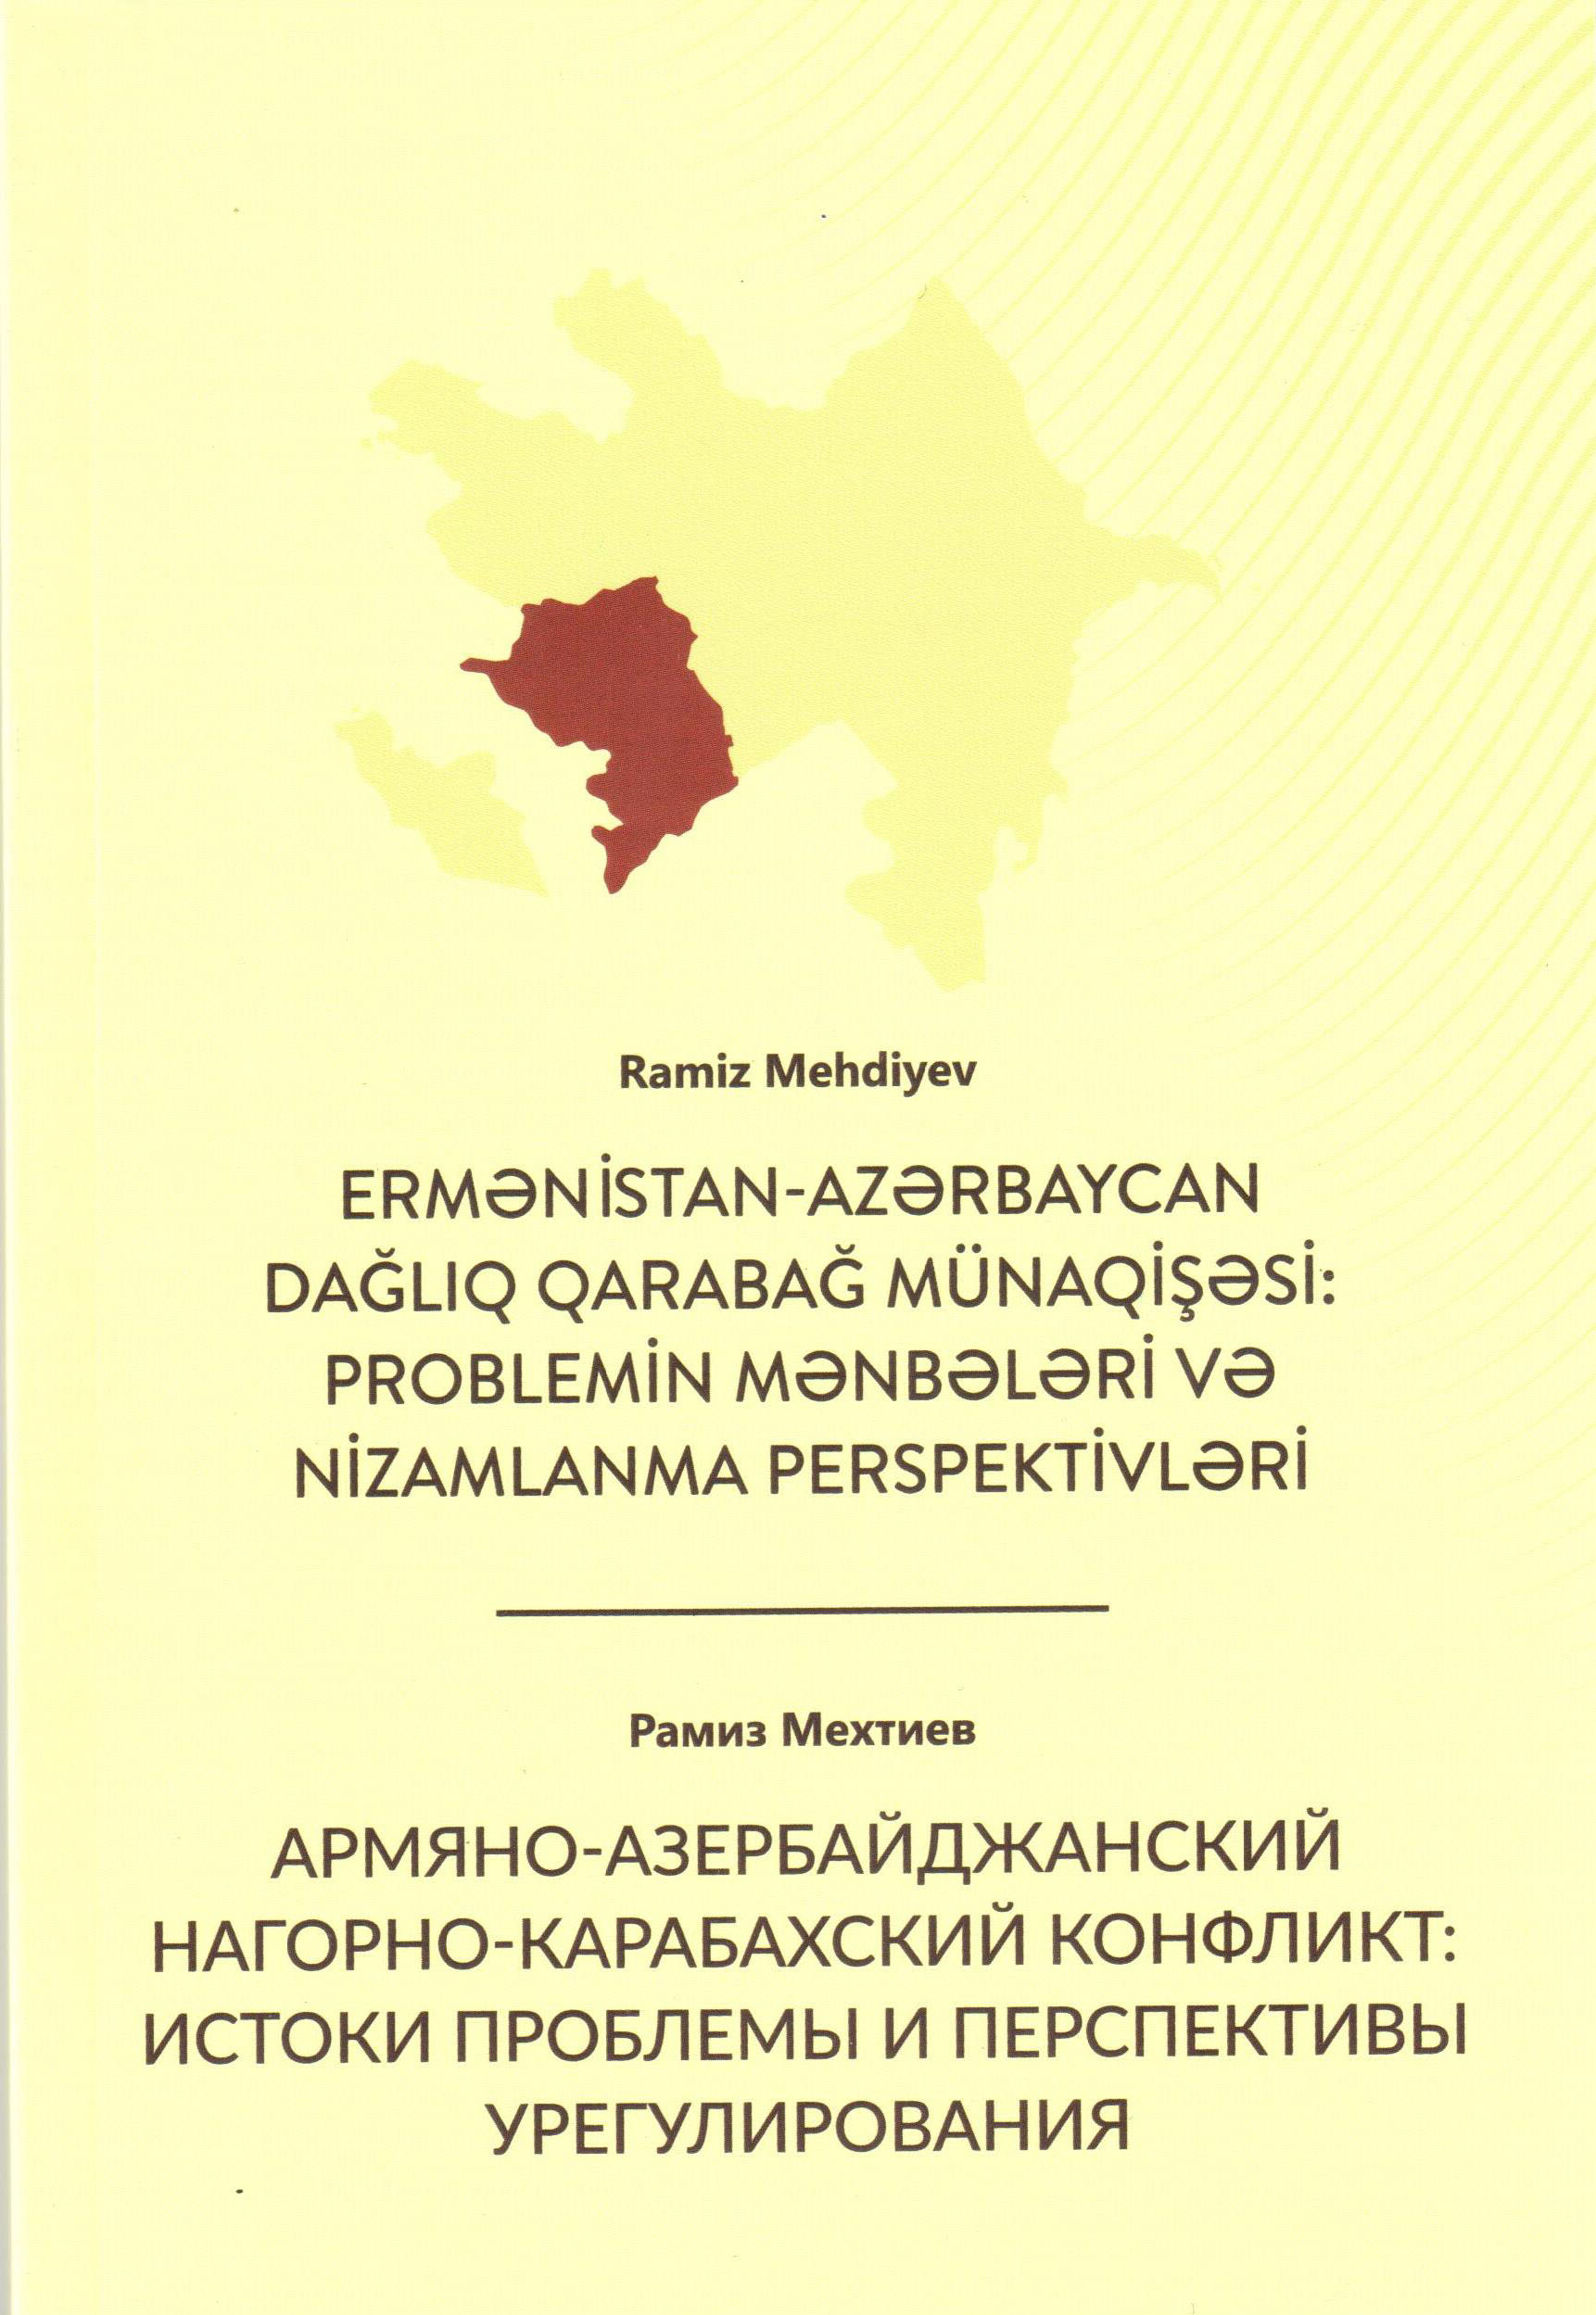 Взгляд на армяно-азербайджанский нагорно-карабахский конфликт в научно-исторической и философской плоскости